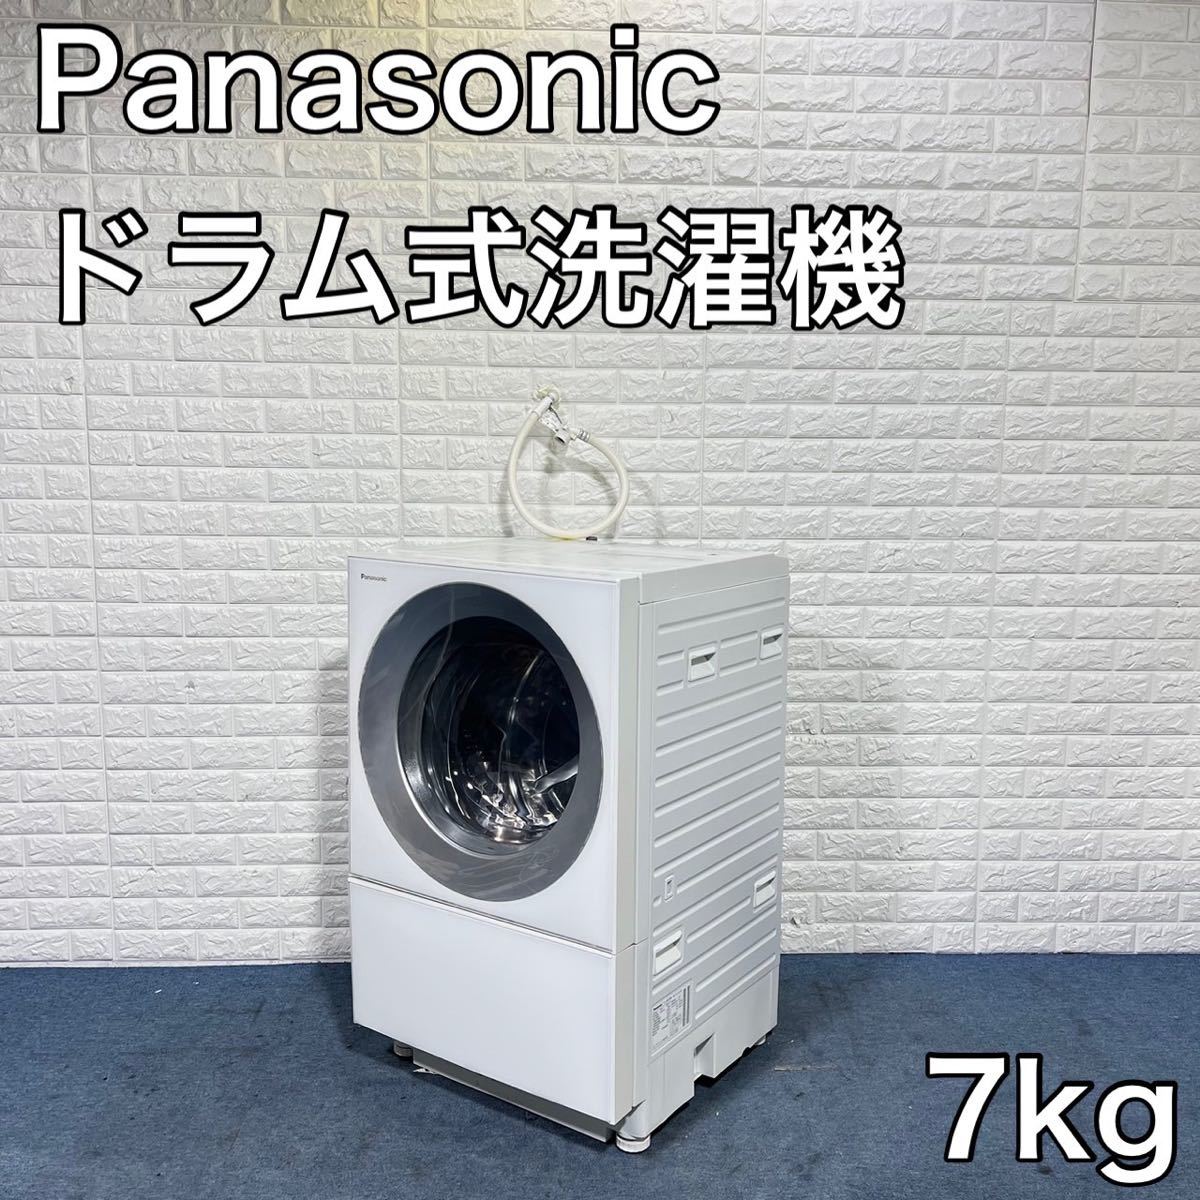 Panasonic ドラム式洗濯機 NA-VG700R 7kg 家電 C551-